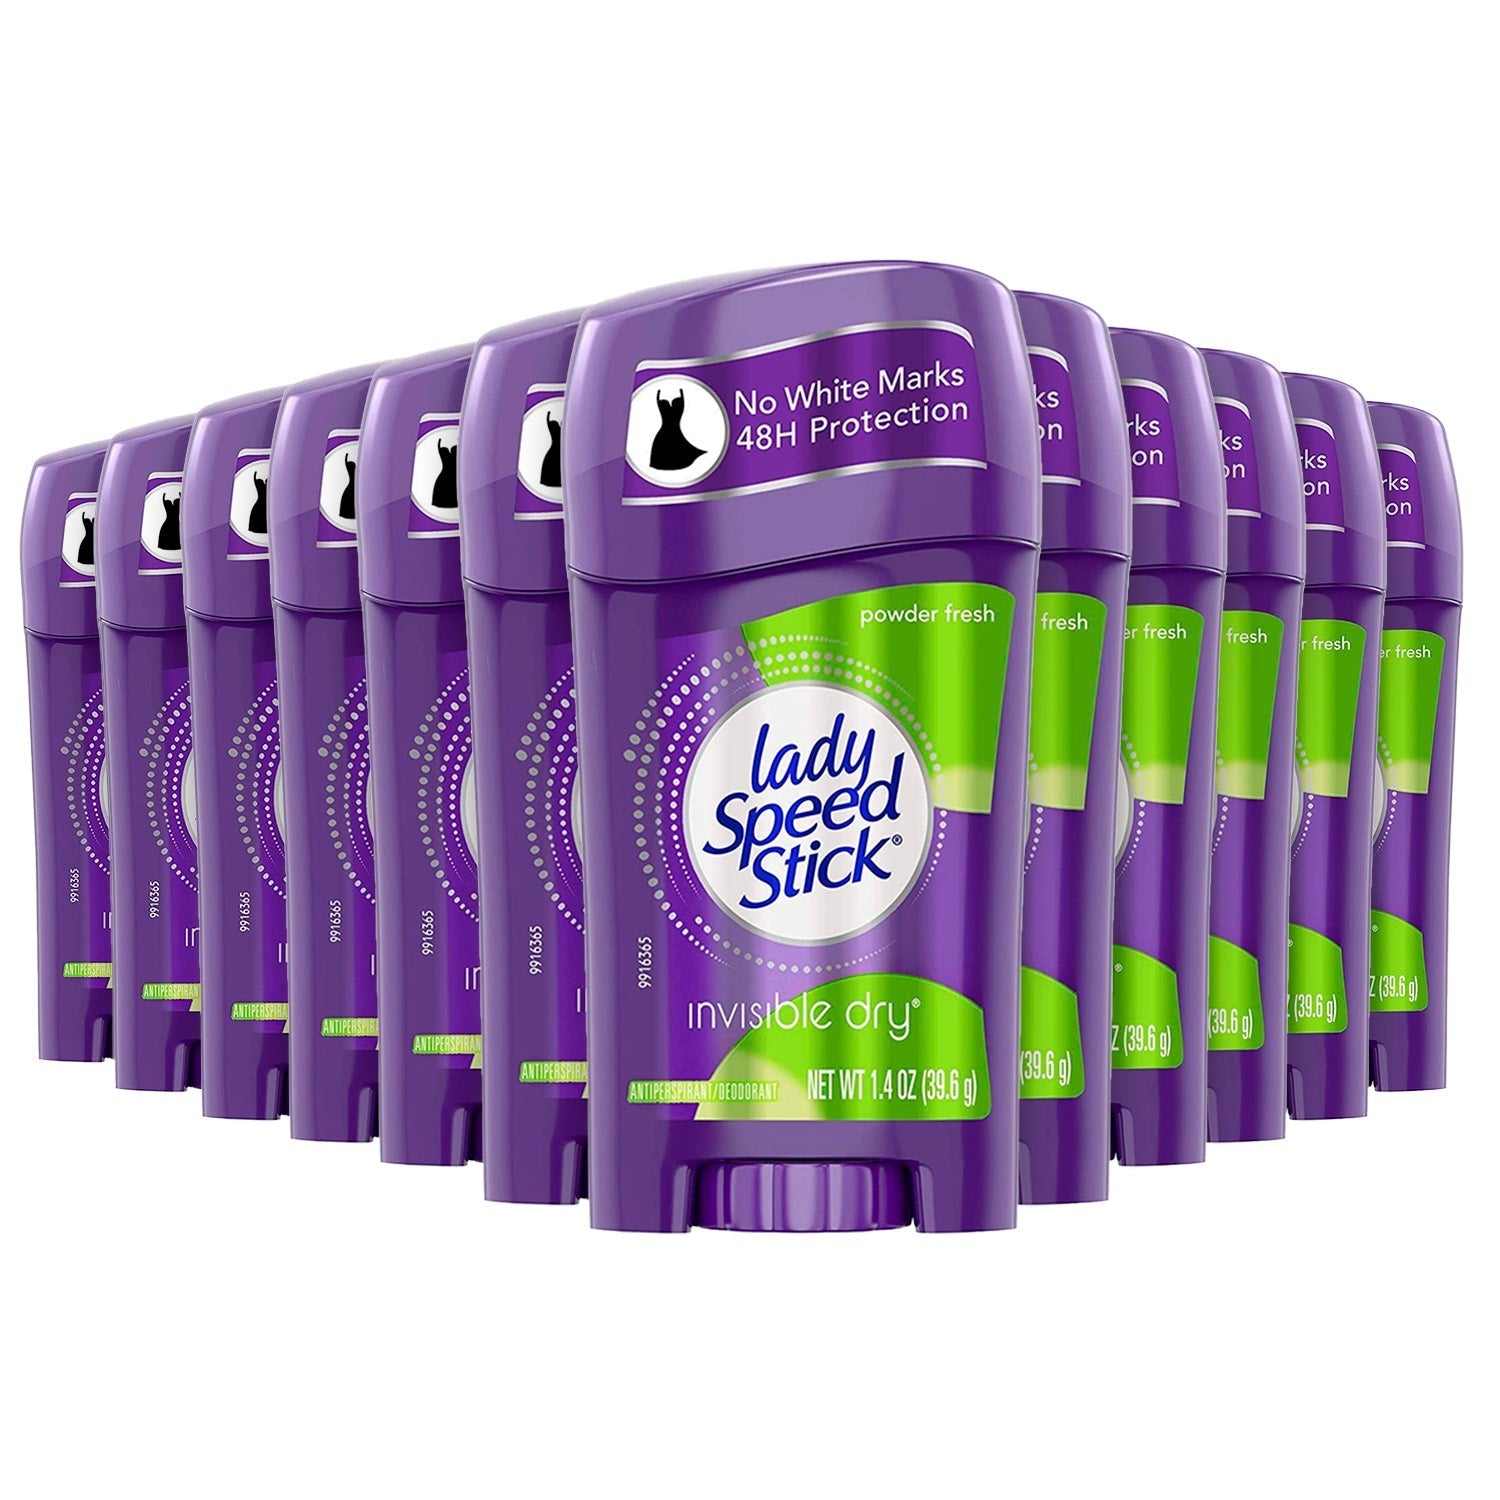 Lady Speed Stick Invisible Dry Antiperspirant & Deodorant, Powder Fresh  1.4 oz - 12 Pack